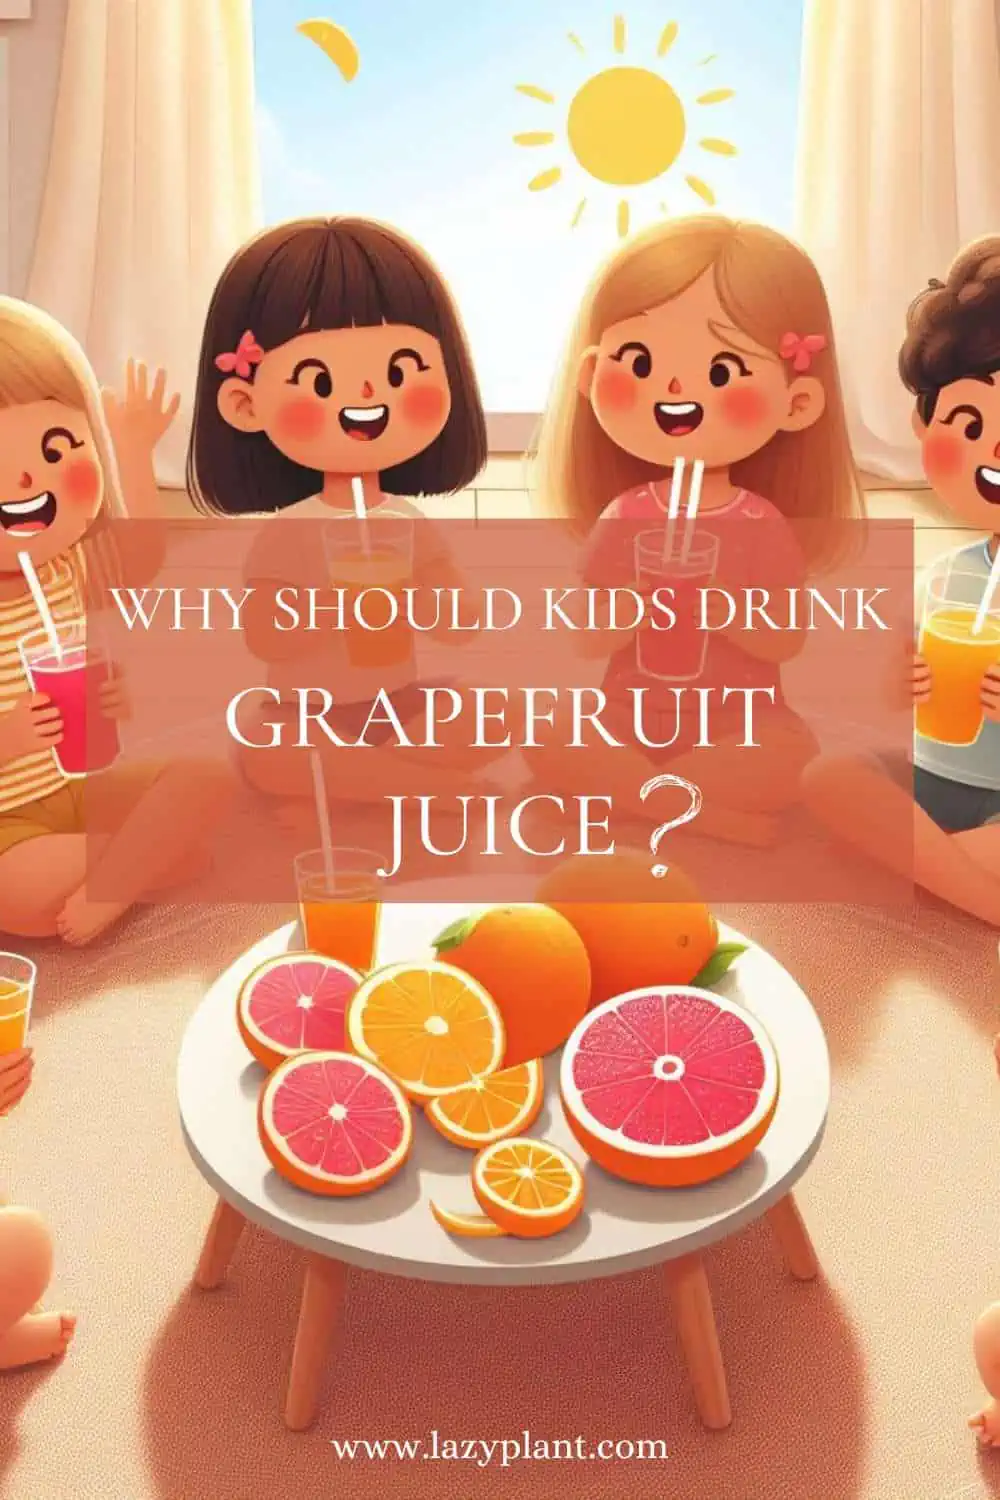 Benefits of grapefruit juice for toddlers, kids & teens